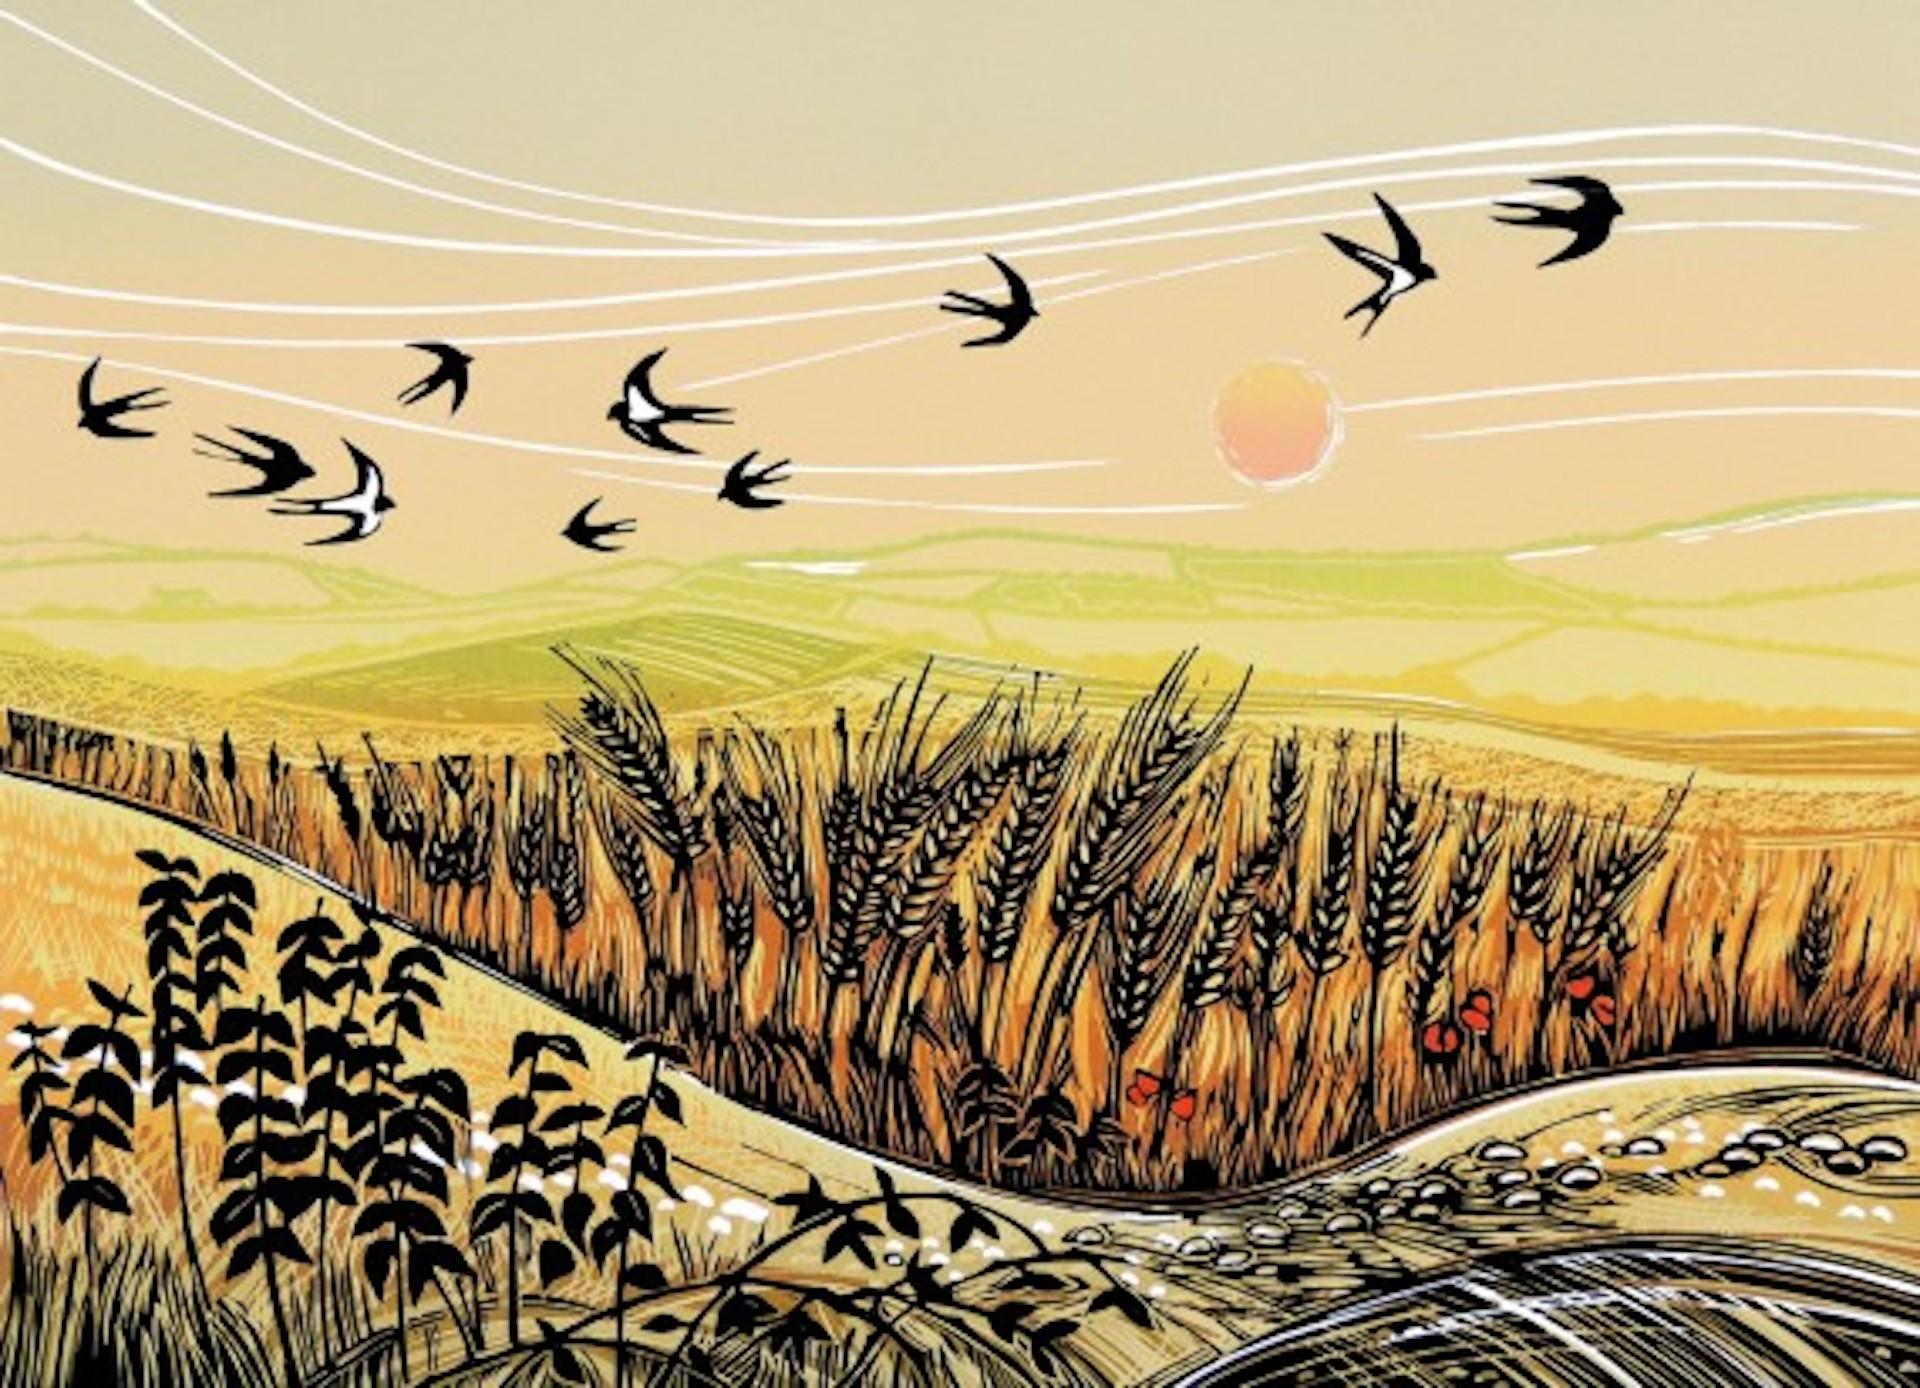 Flight Over The Barley, Rob Barnes, estampe en édition limitée, œuvre d'art Birds Field